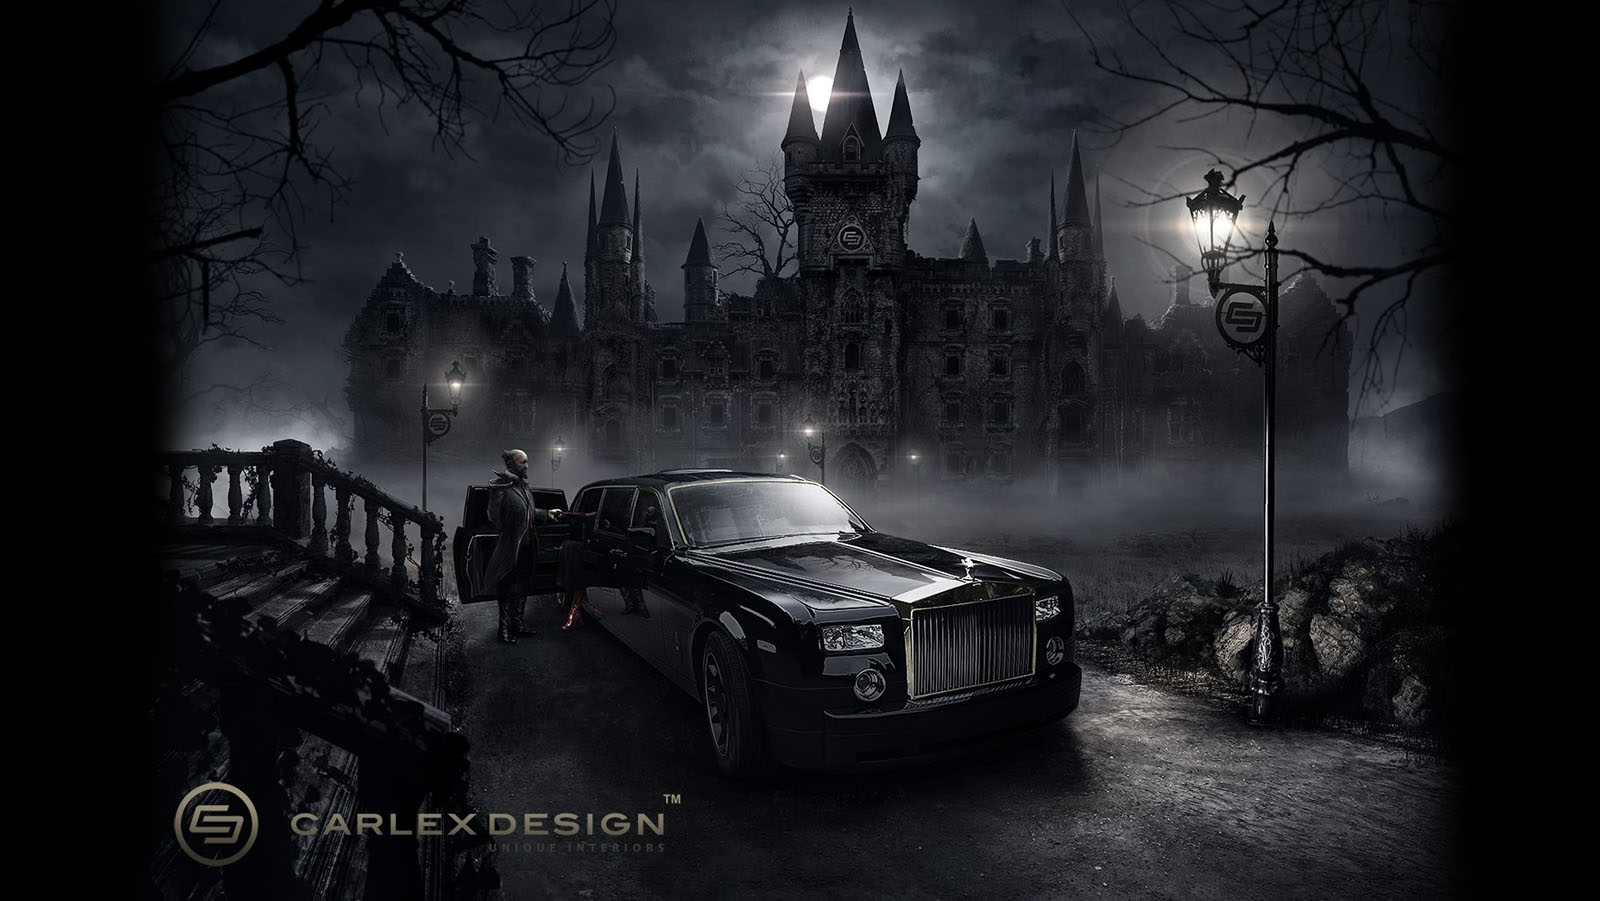 Carlex Design Project Abyss krijgt Gothic thema 